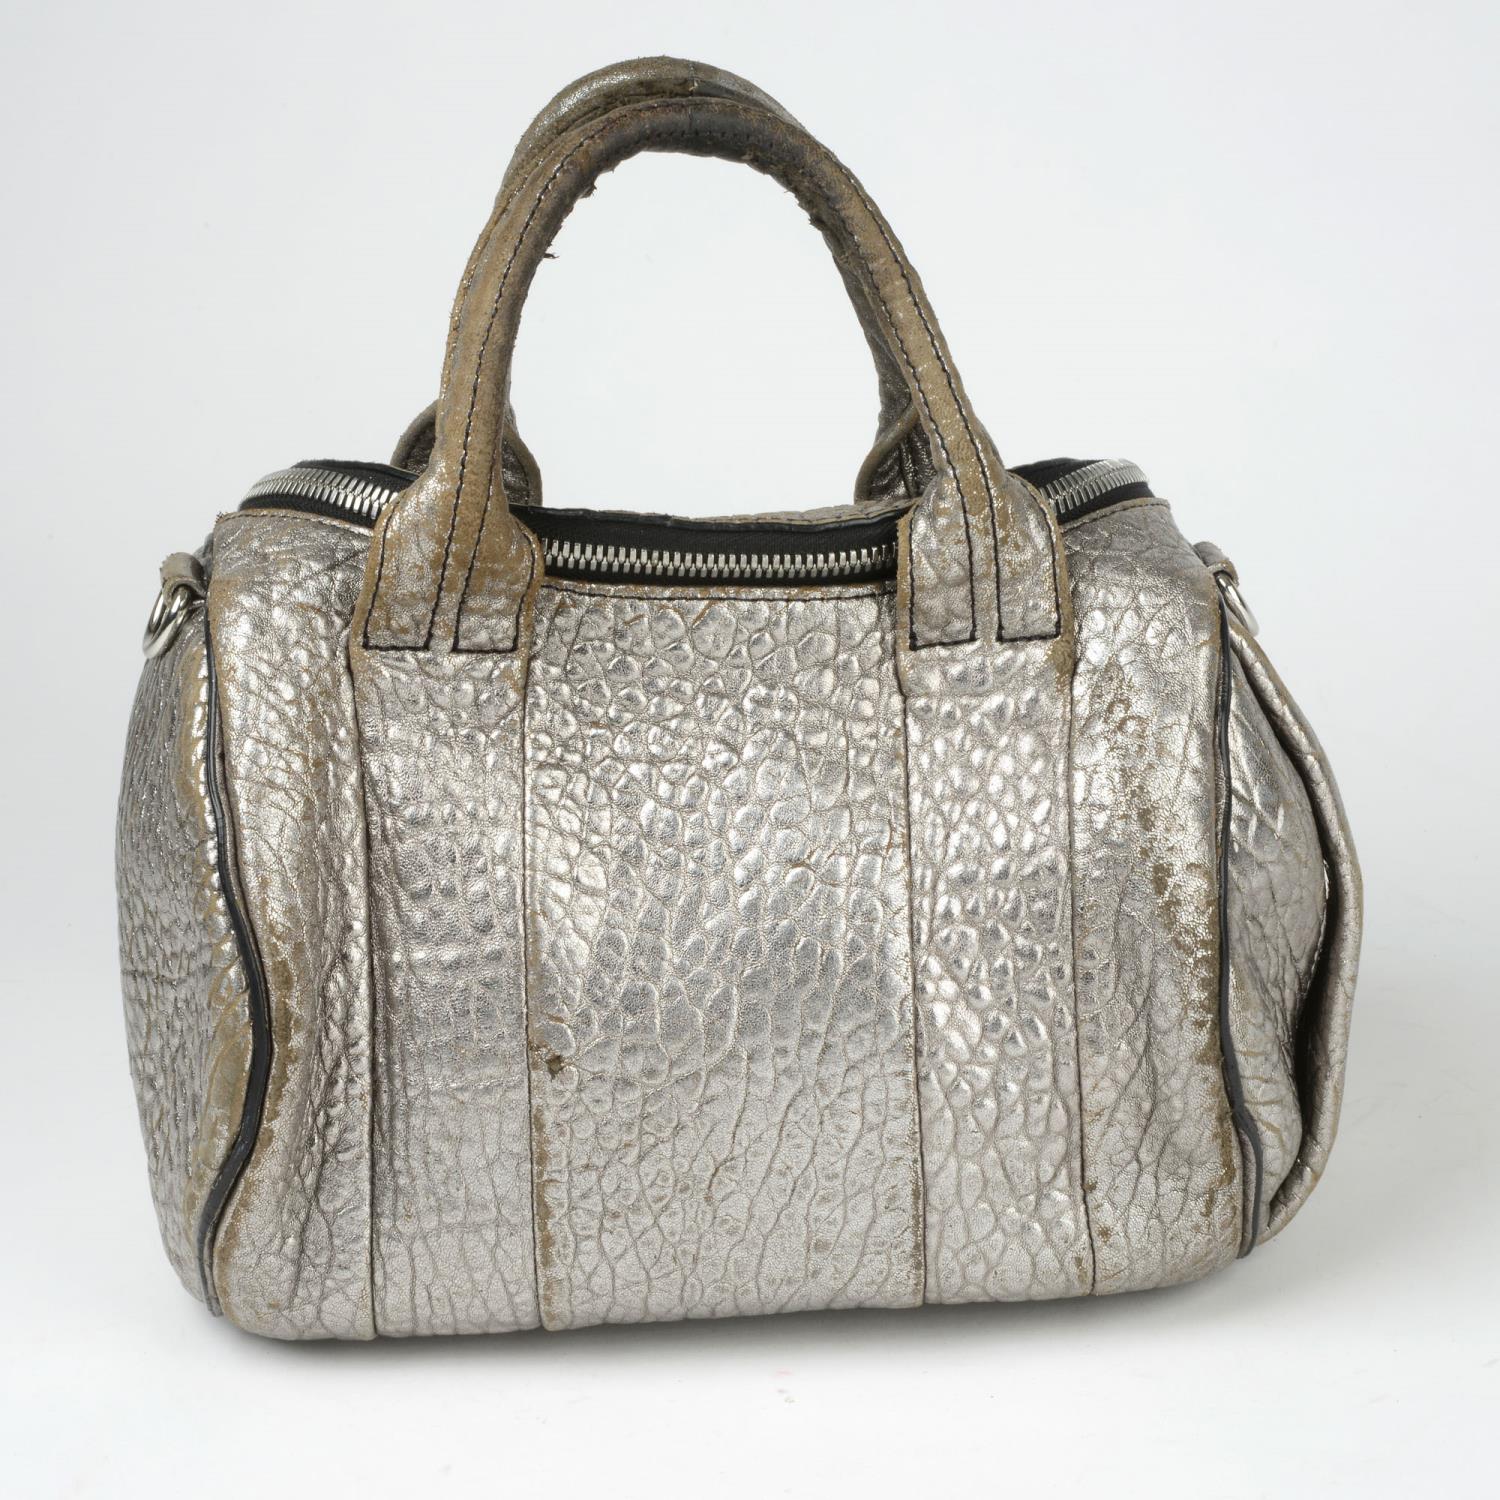 ALEXANDER WANG - a Rockie leather handbag. - Image 3 of 5